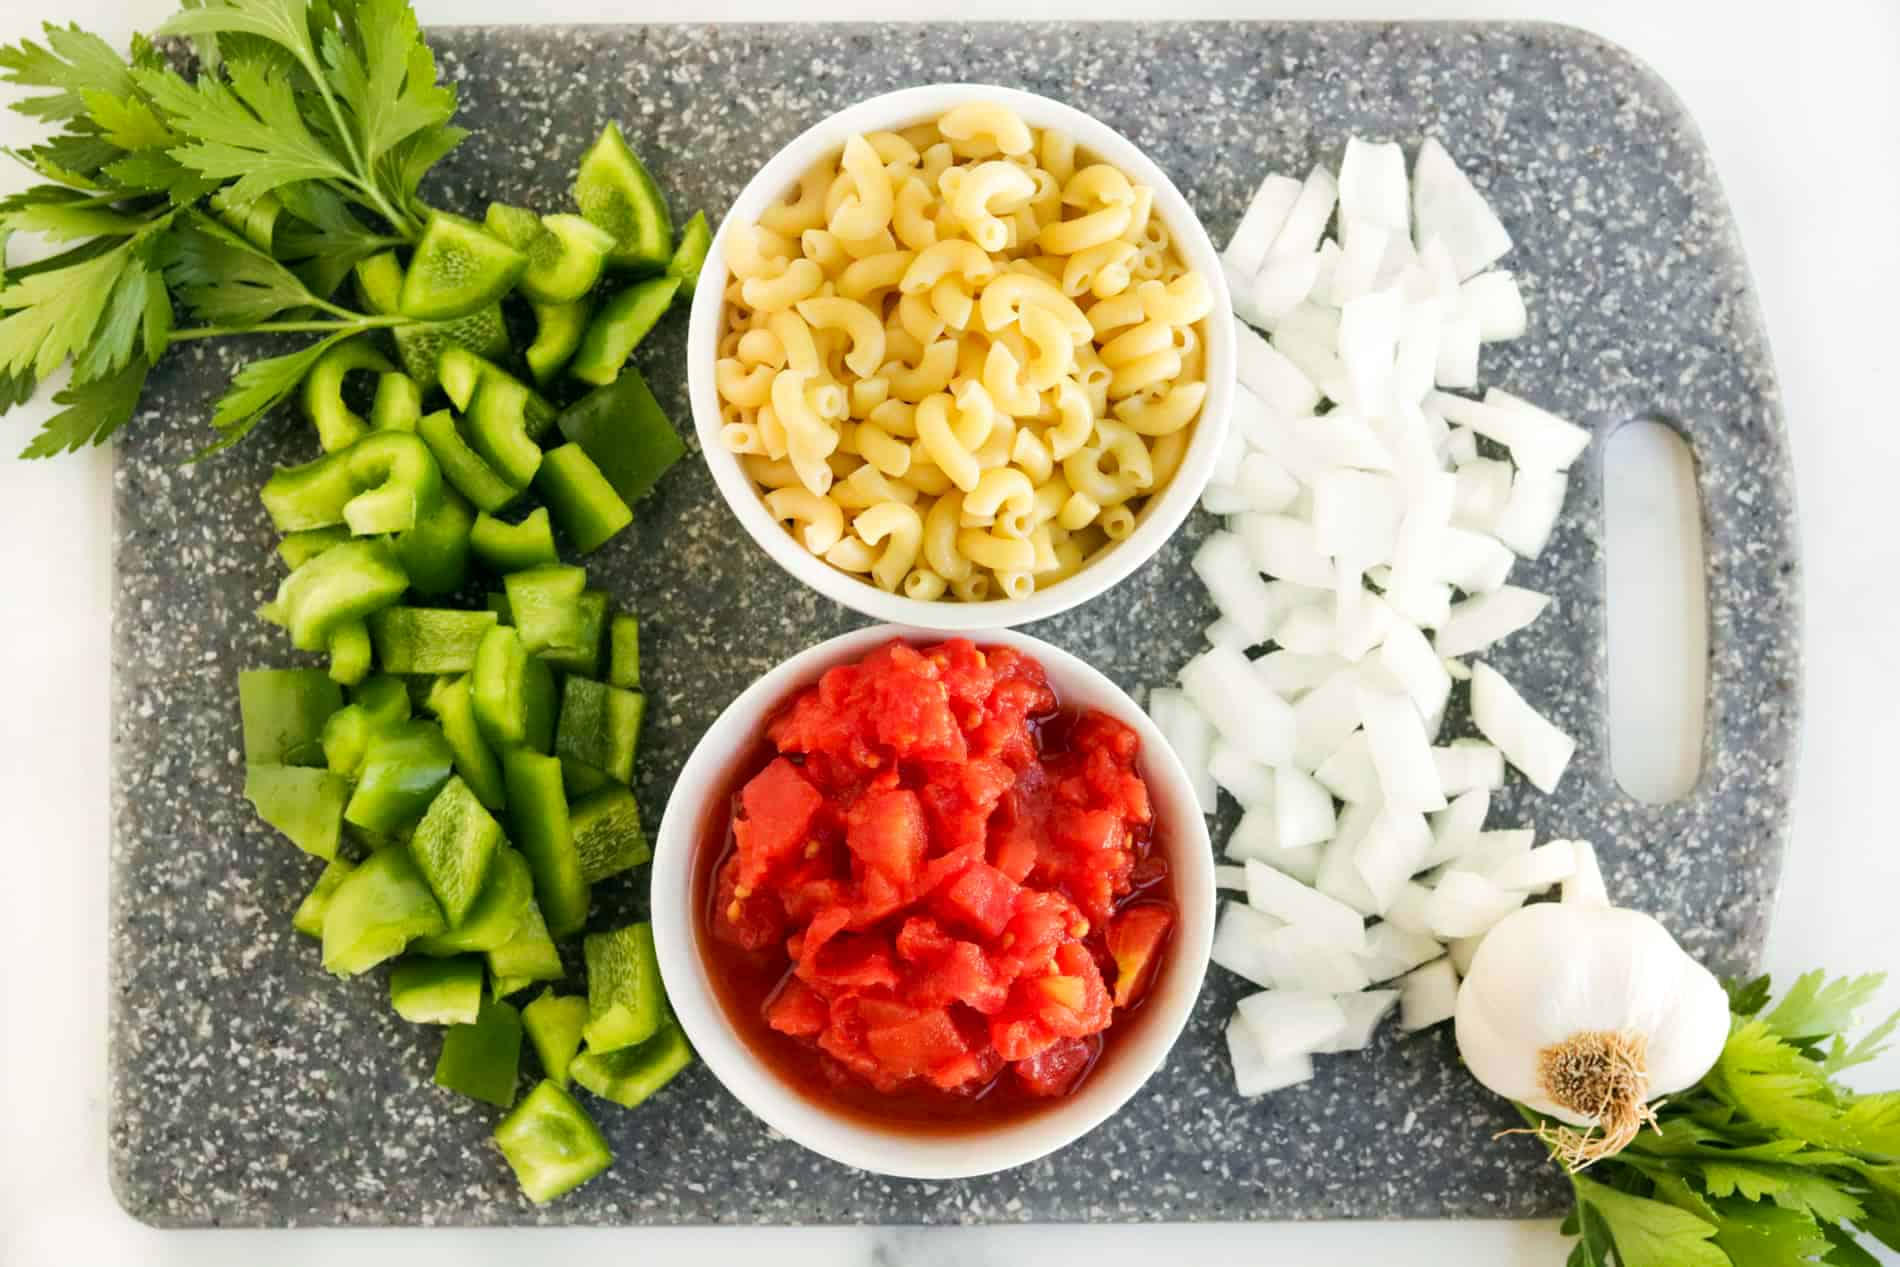 american chop suey recipe ingredients